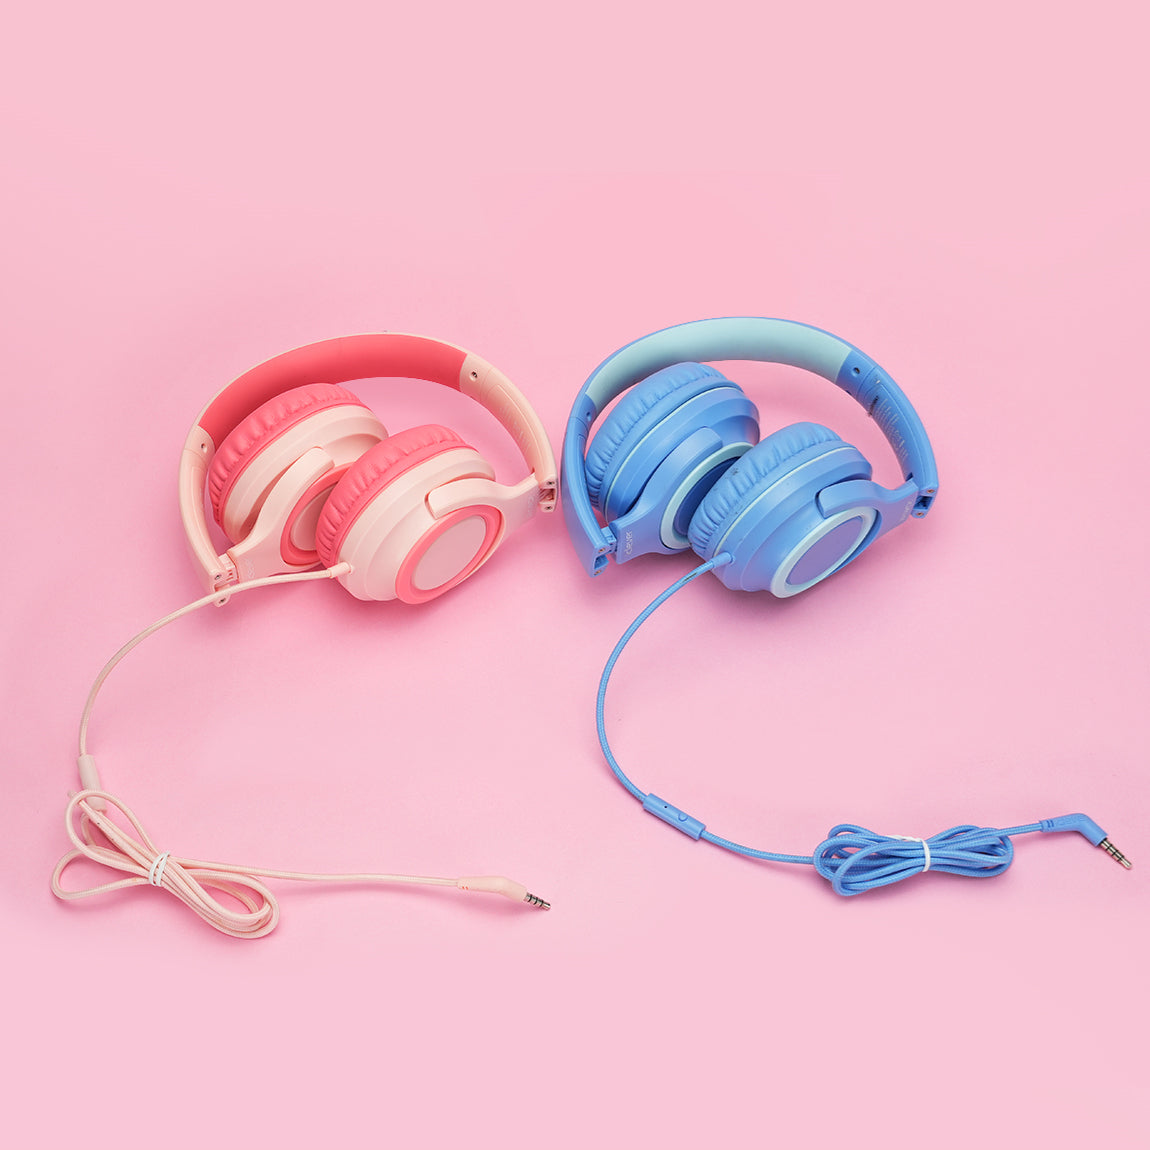 2-Pack iClever Kids Headphones HS22 Pink &amp; Blue (EU)